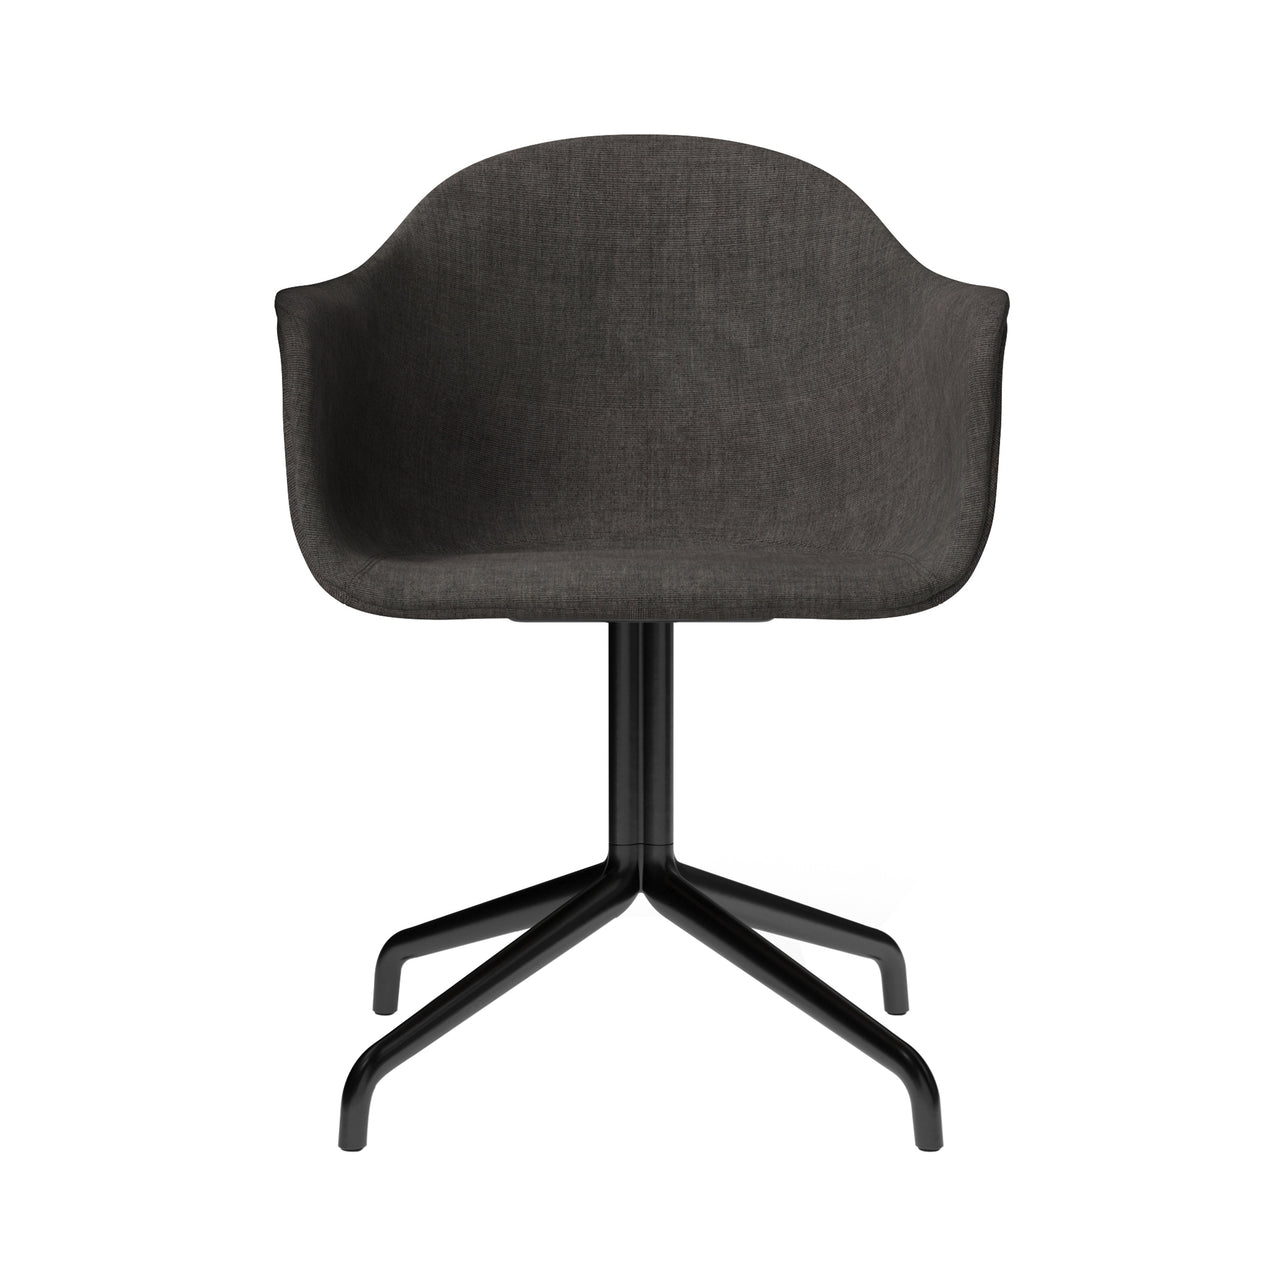 Harbour Dining Chair Star Base: Upholstered + Black Steel